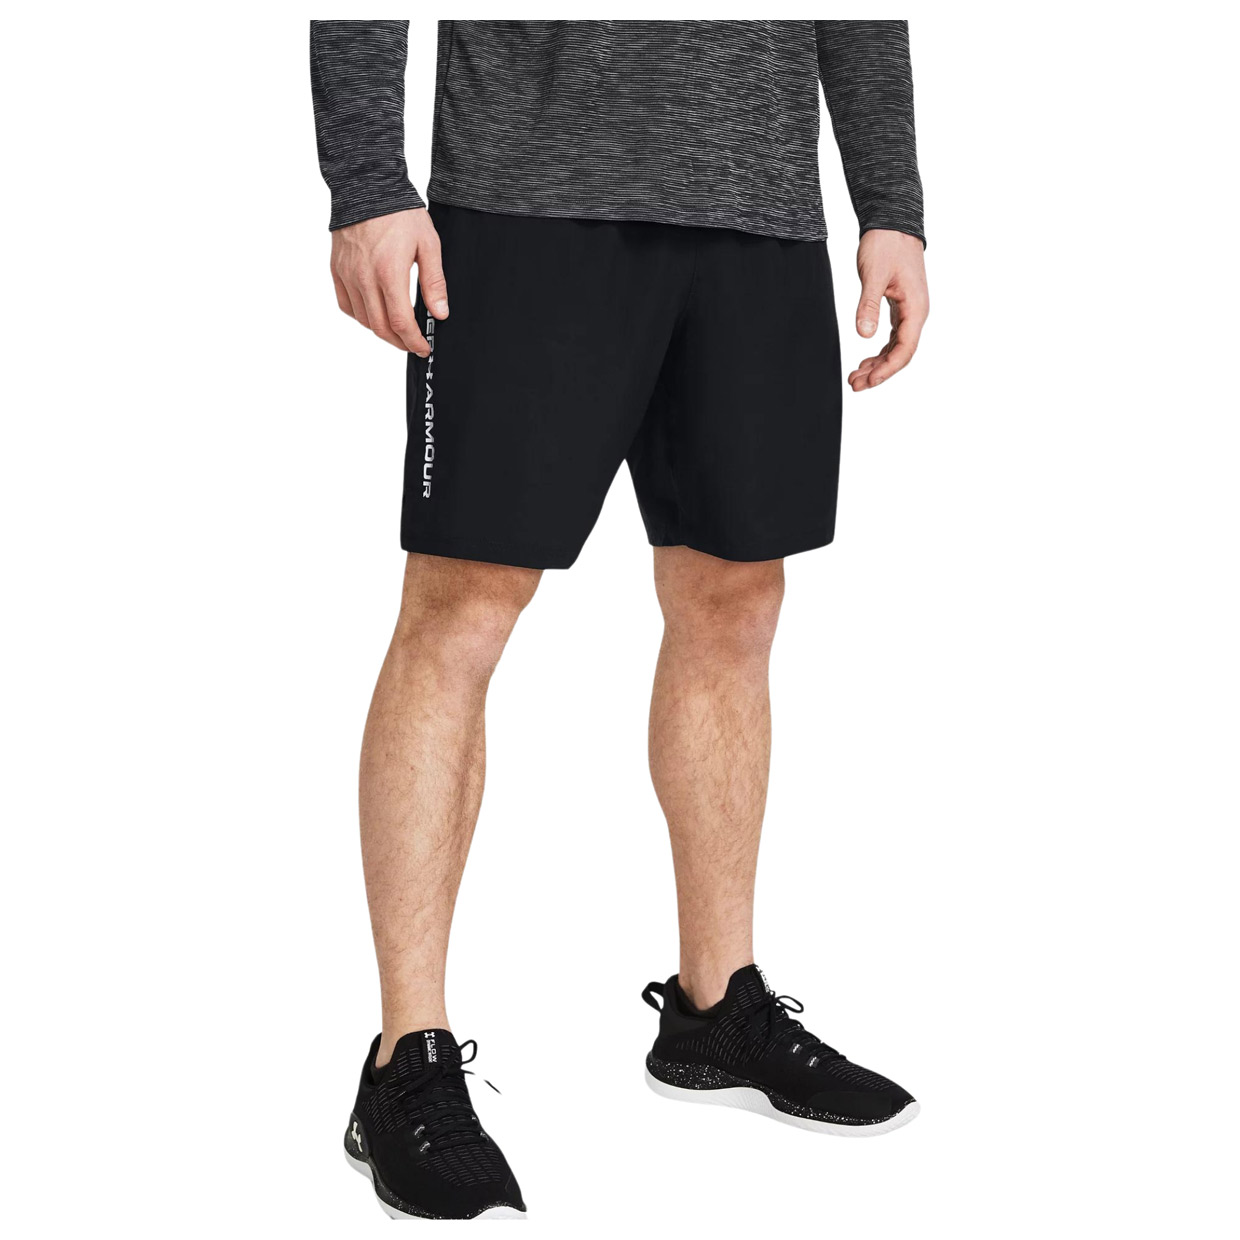 Herren Sporthose Woven Shorts